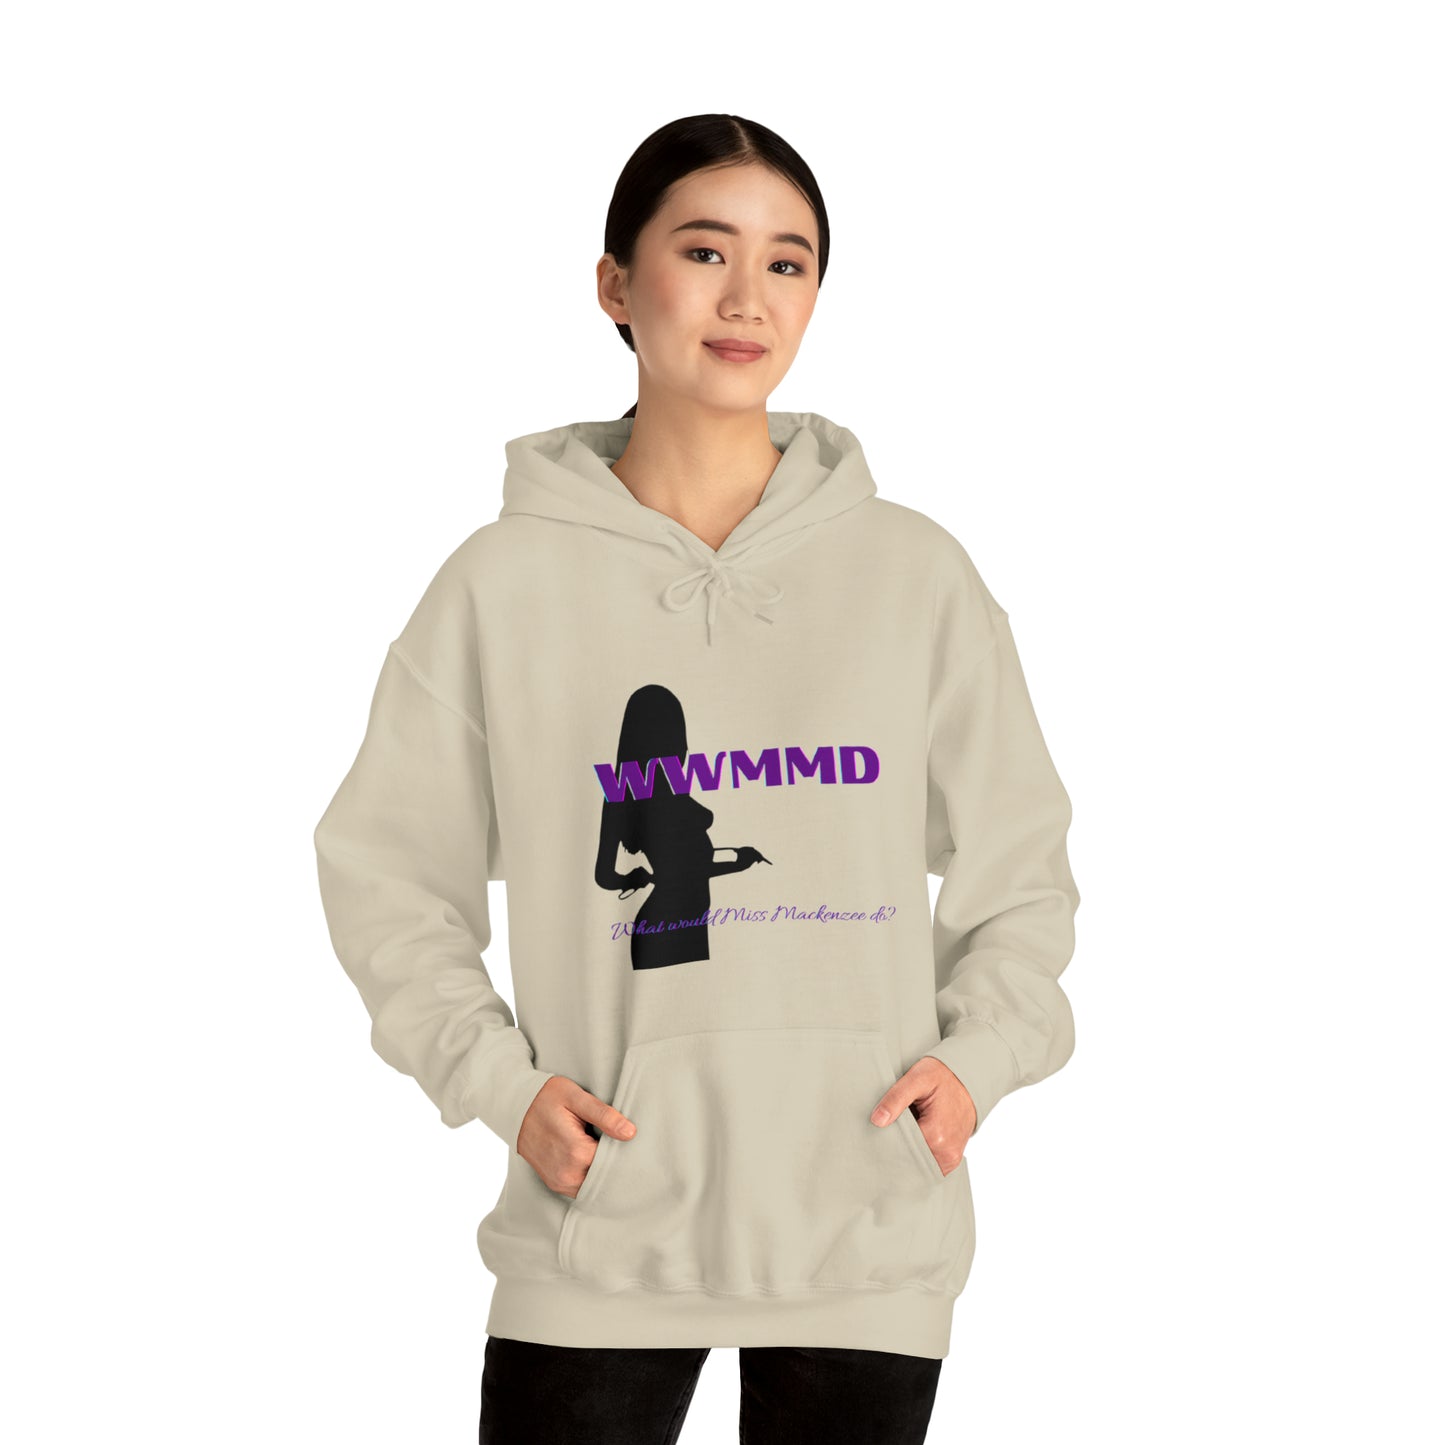 WWMMD Unisex Hooded Sweatshirt